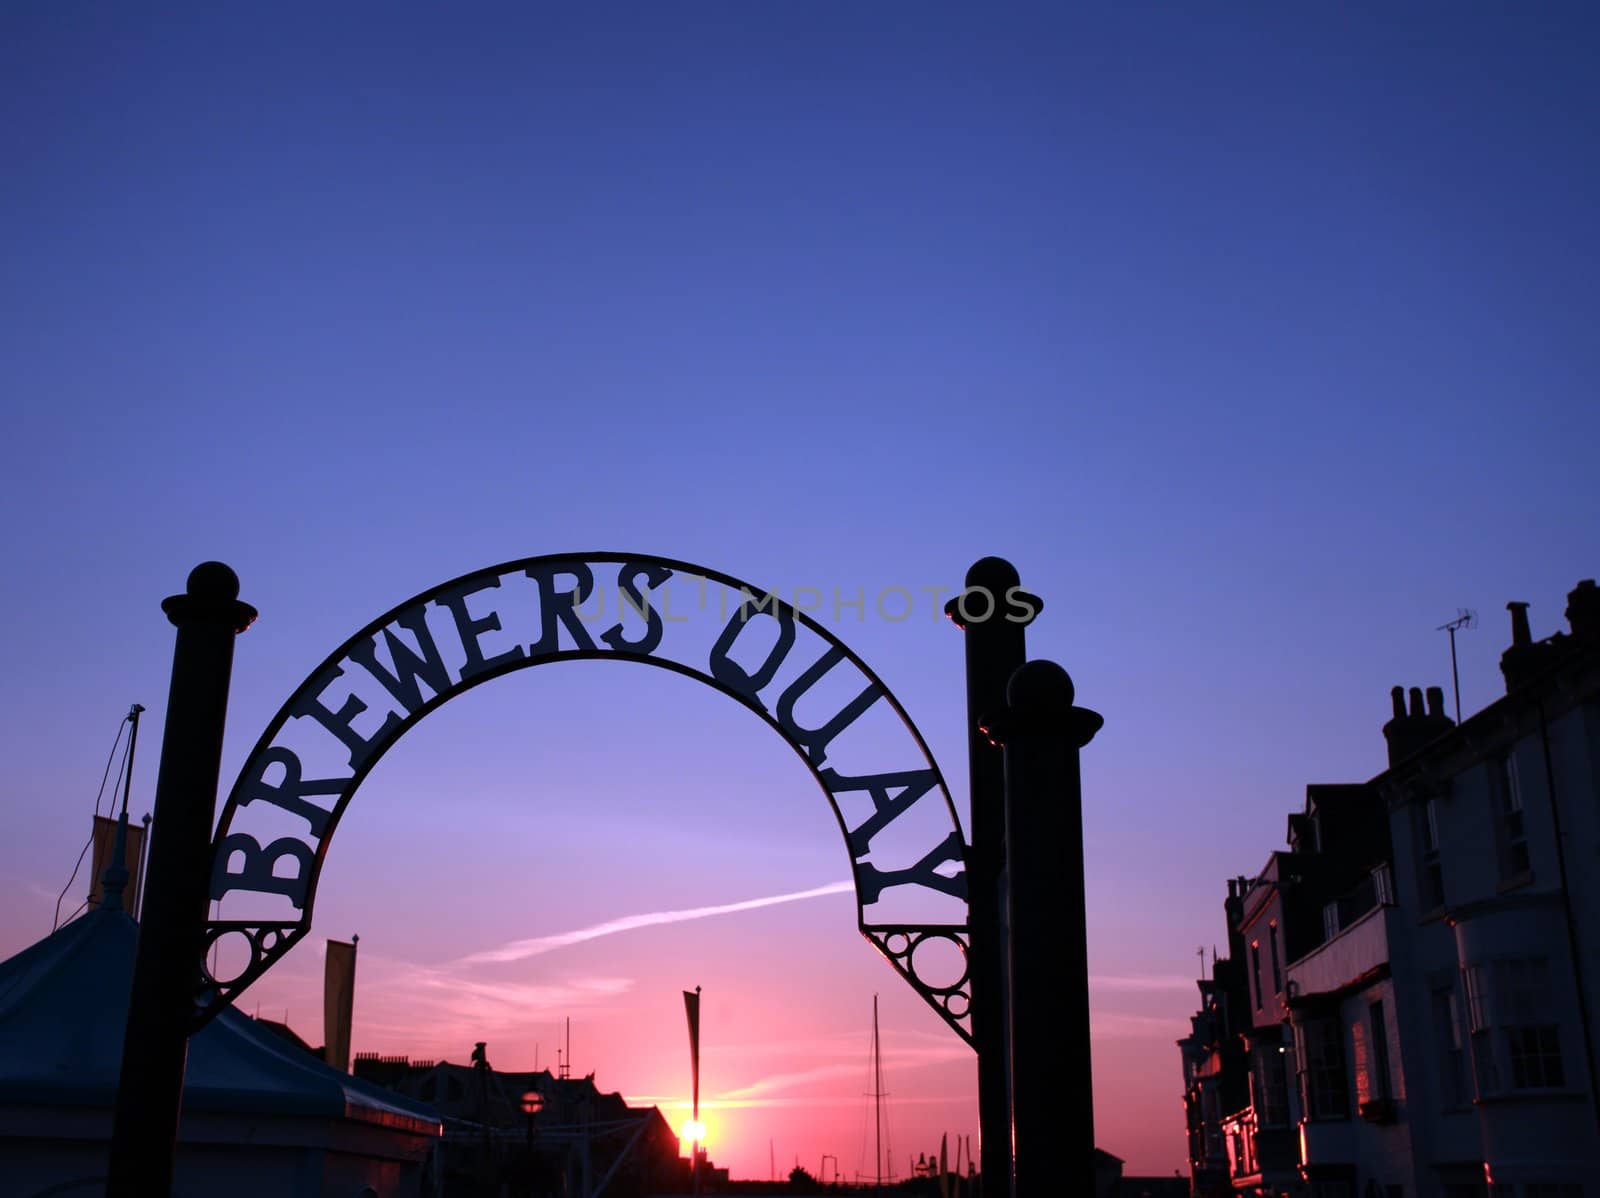 Brewers Key gate in Weymouth Dorset